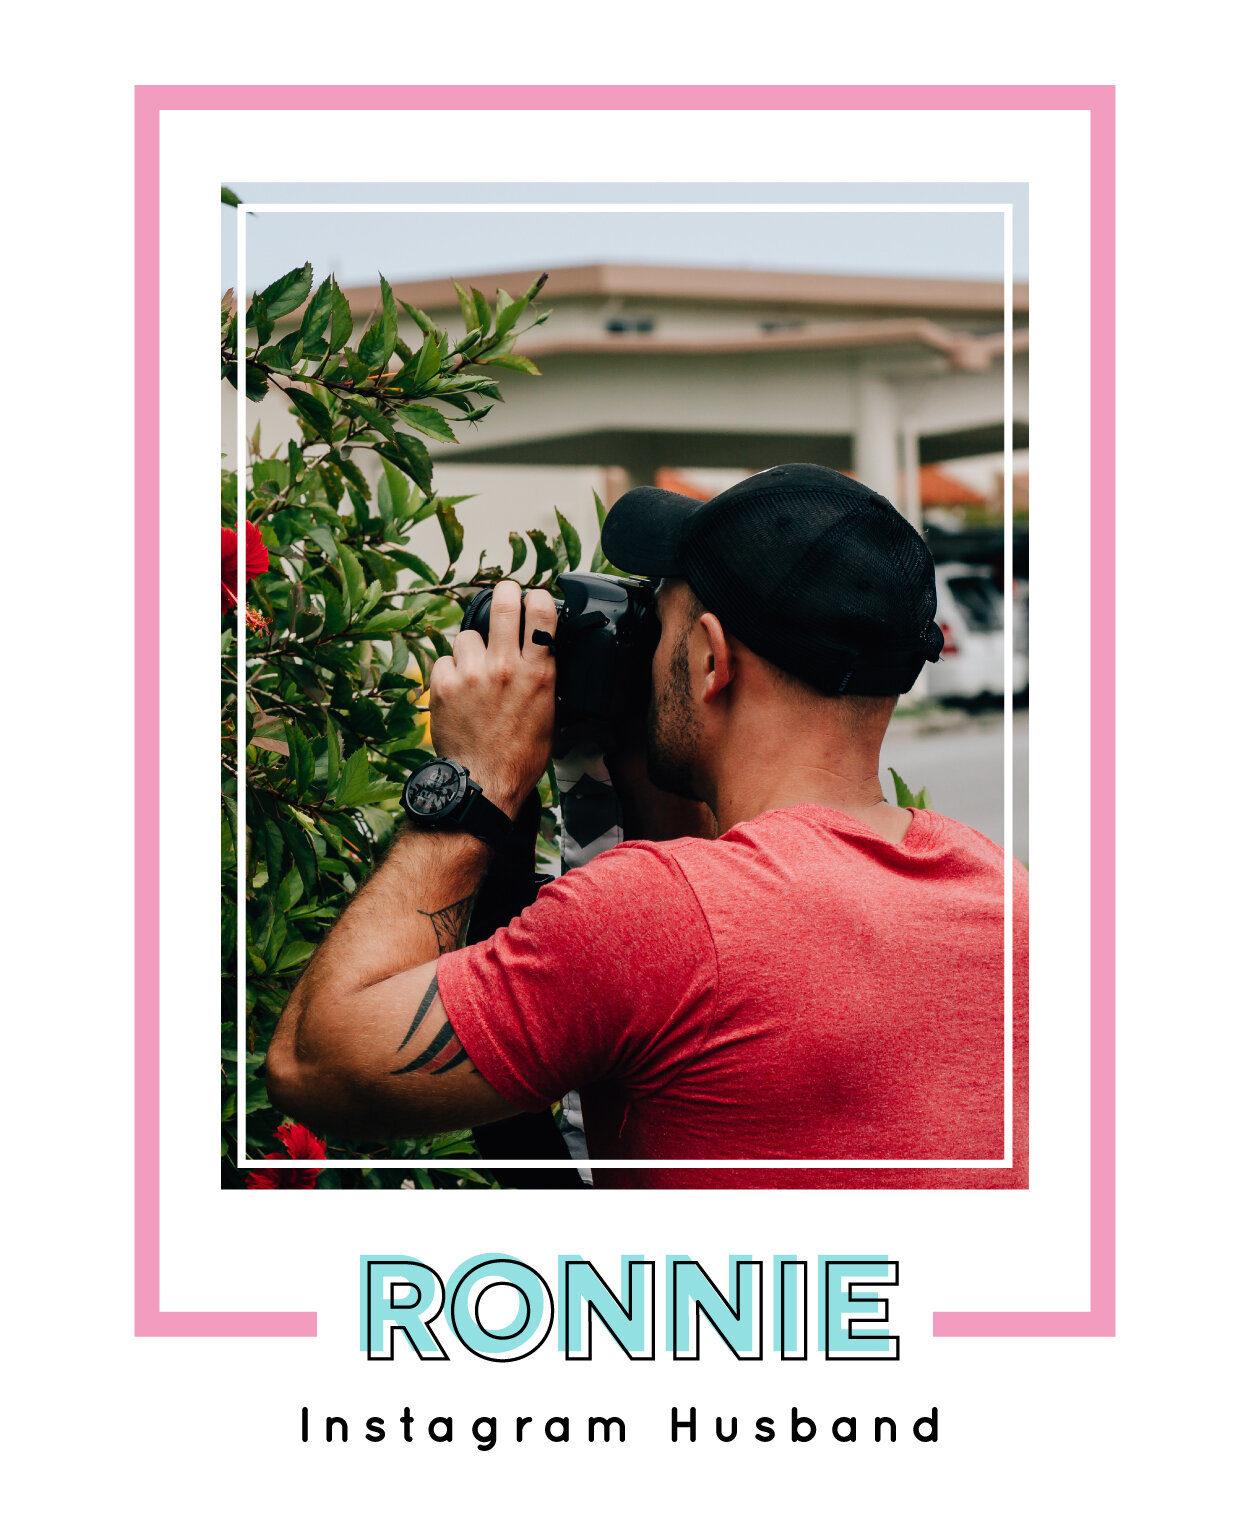 About Ronnie - shopmkkm.com